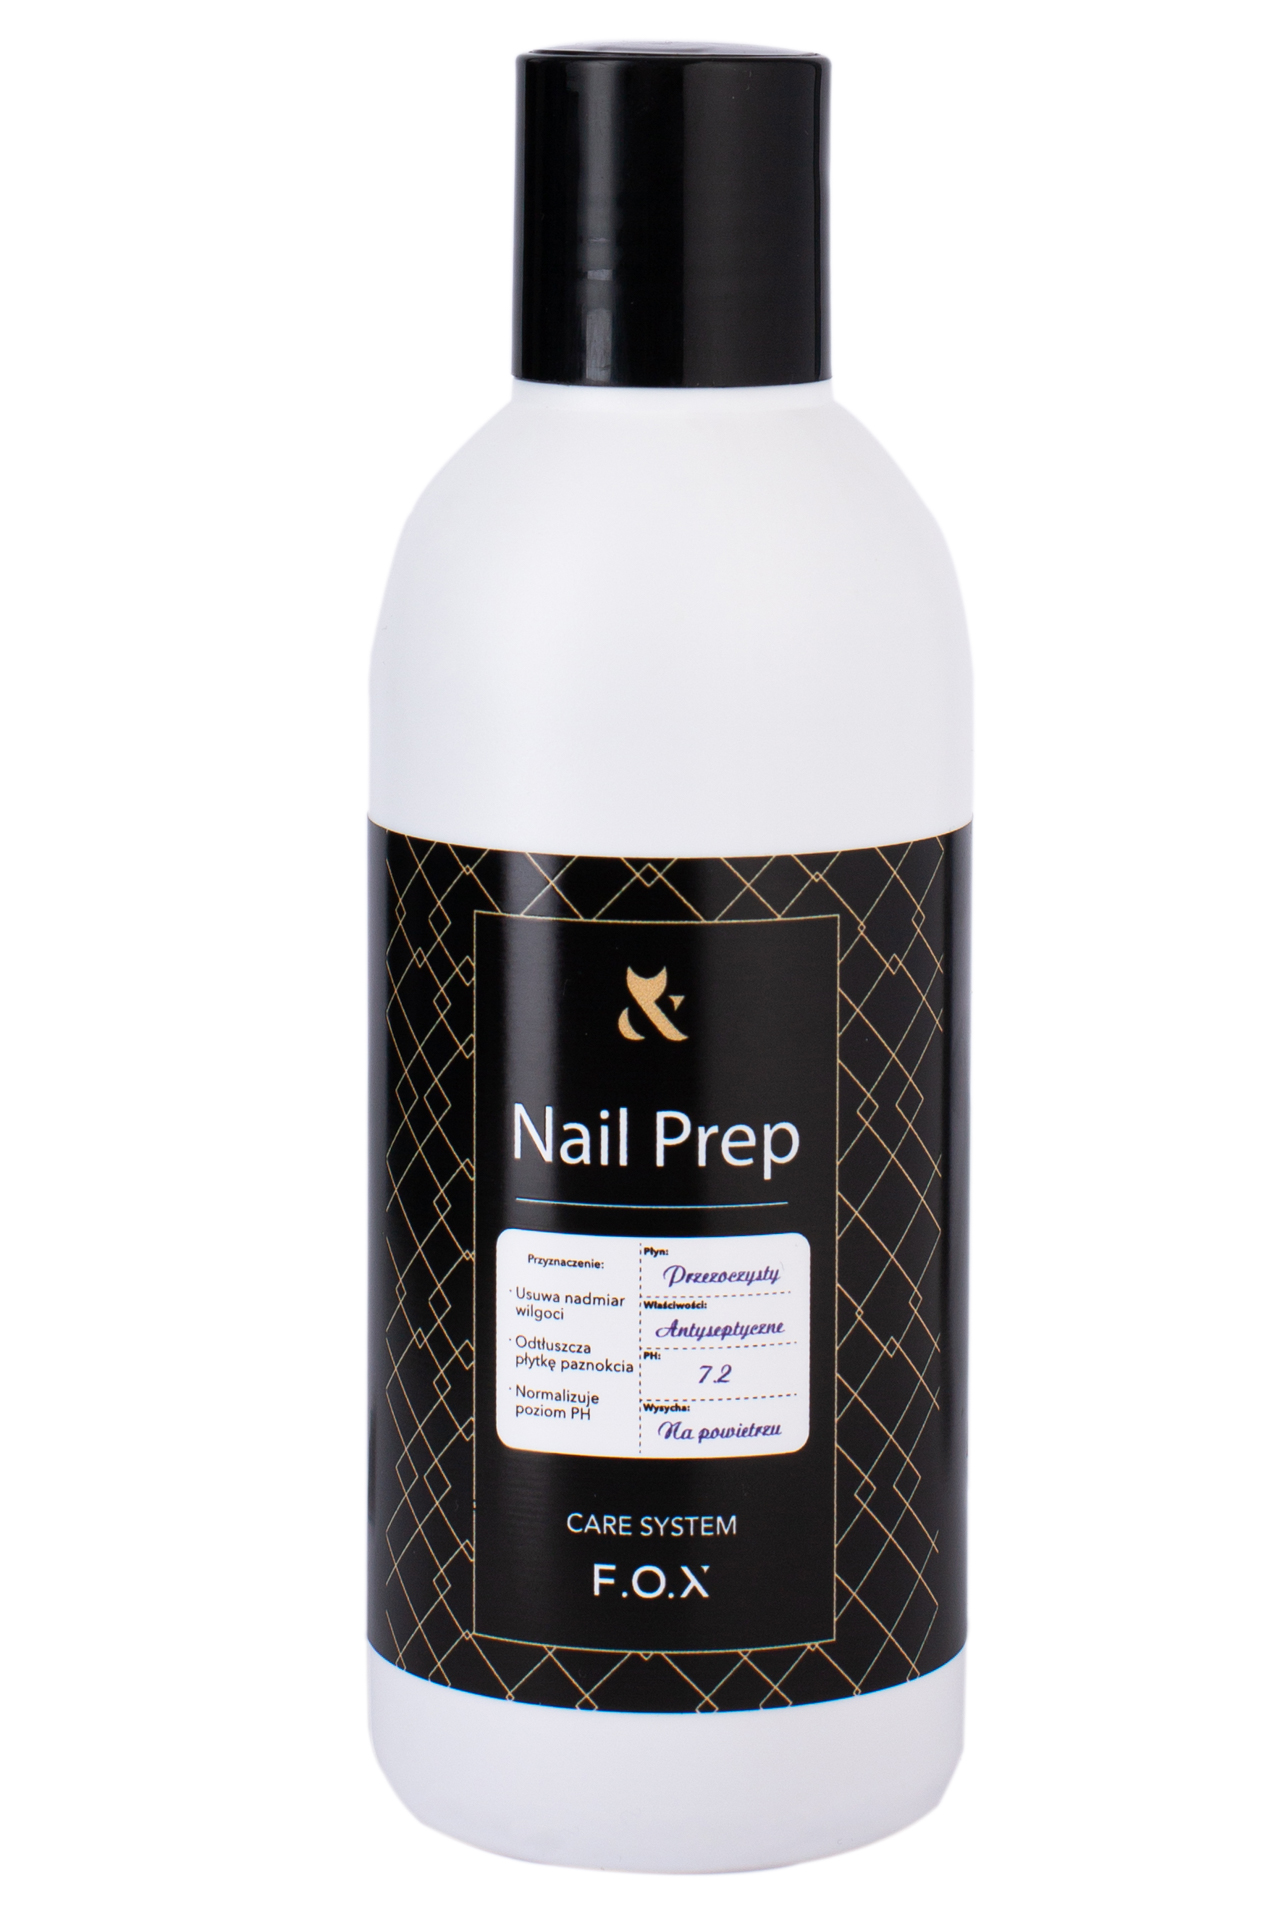 F.O.X Care System Nail Prep, 200 ml